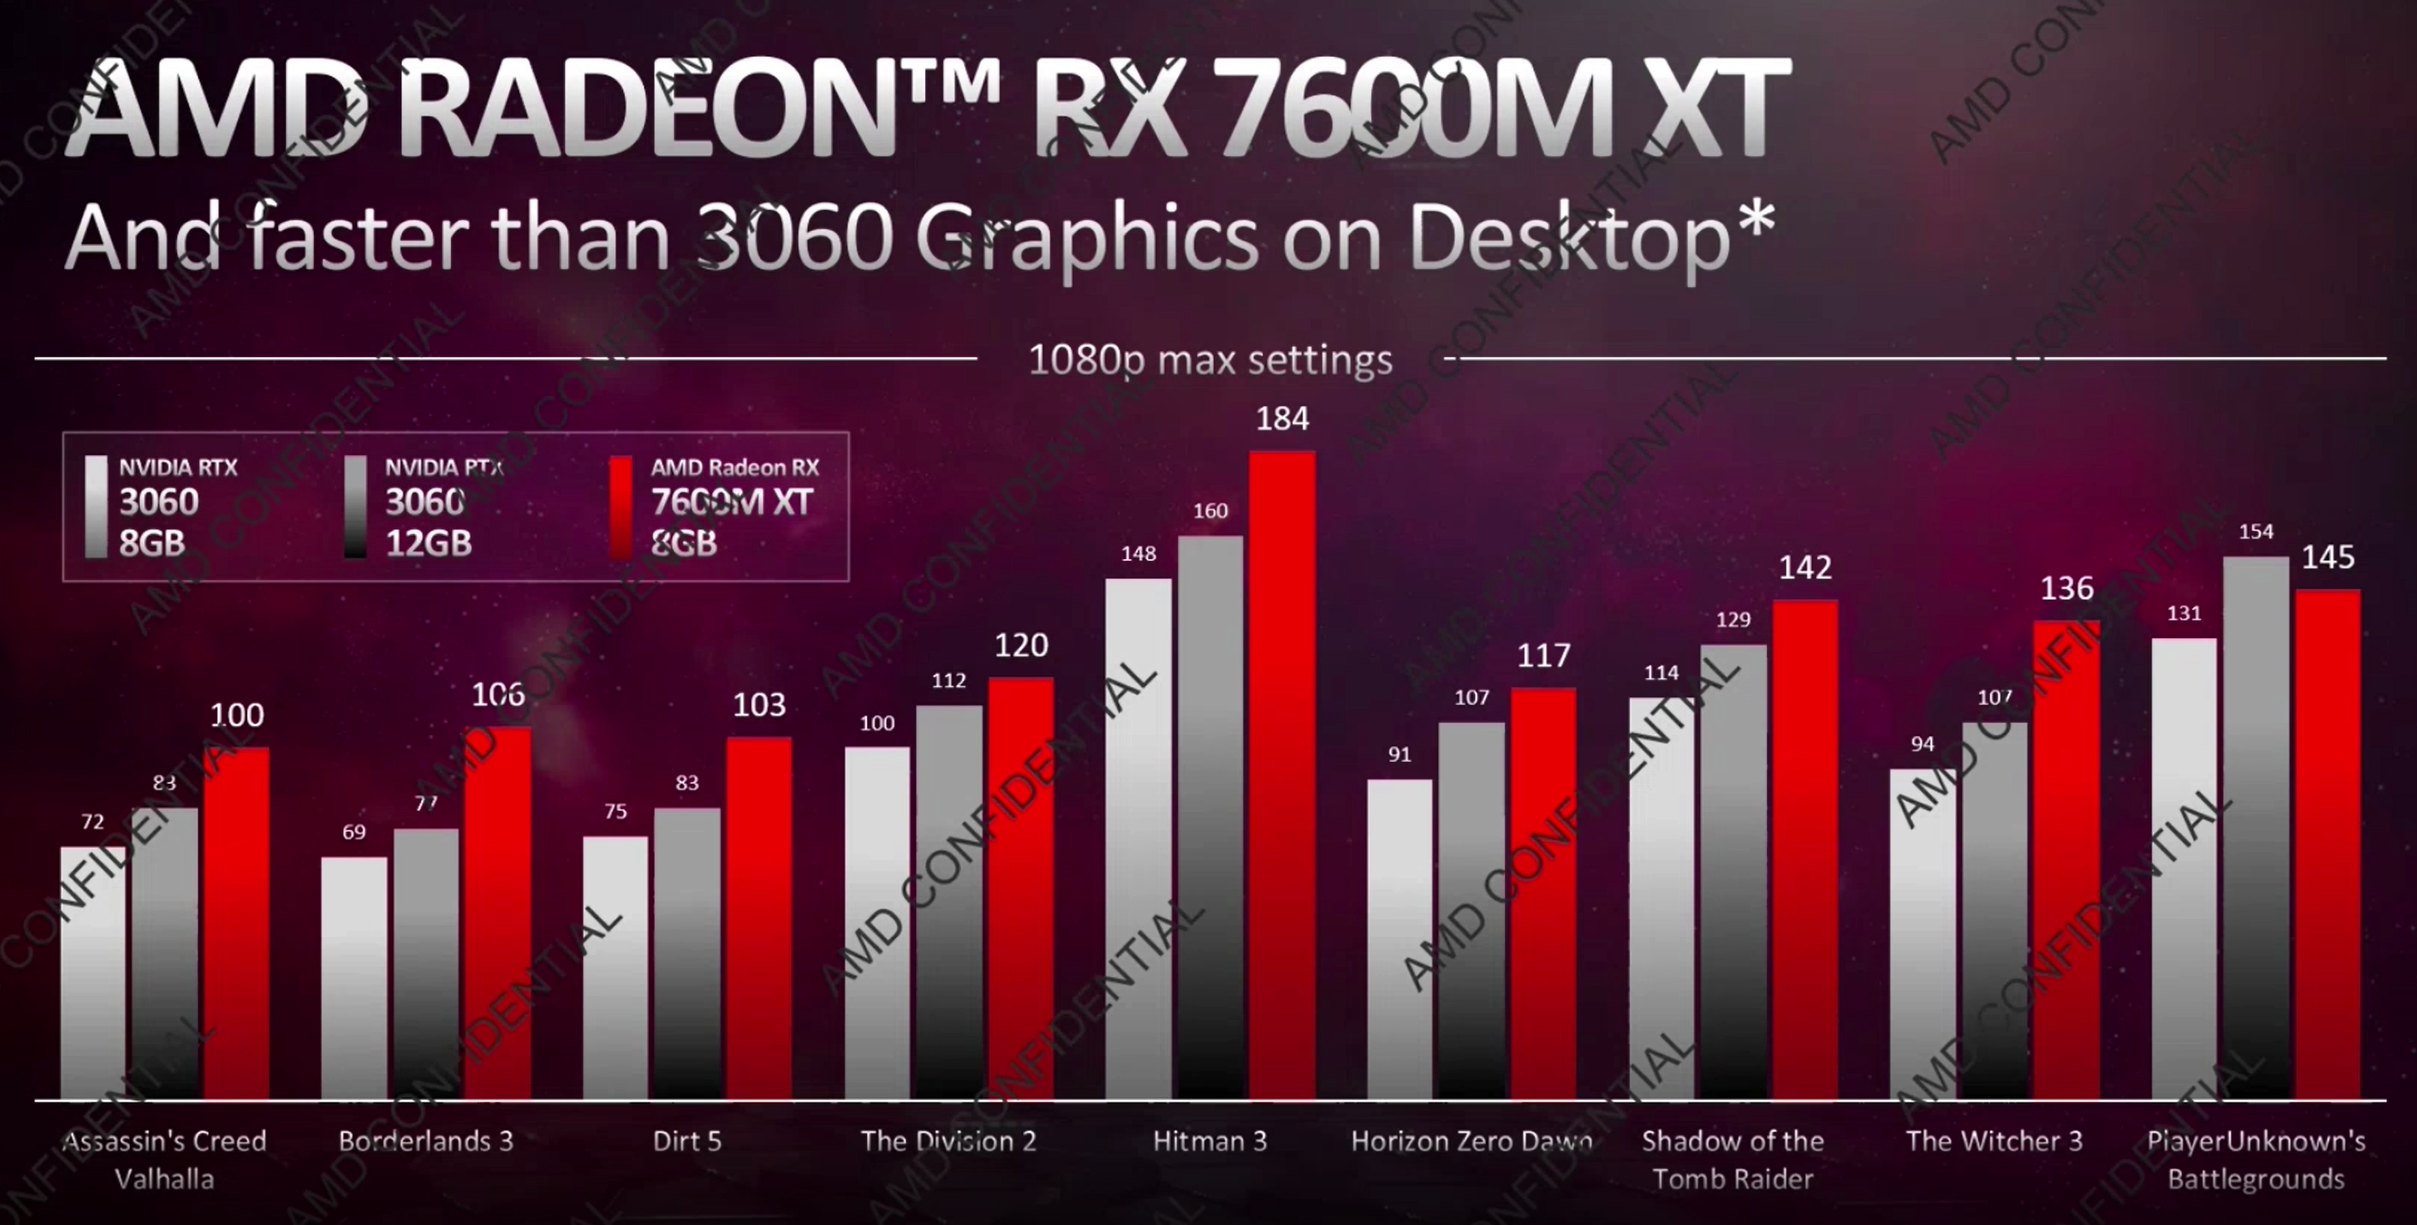 AMD Radeon RX 7600M XT gaming